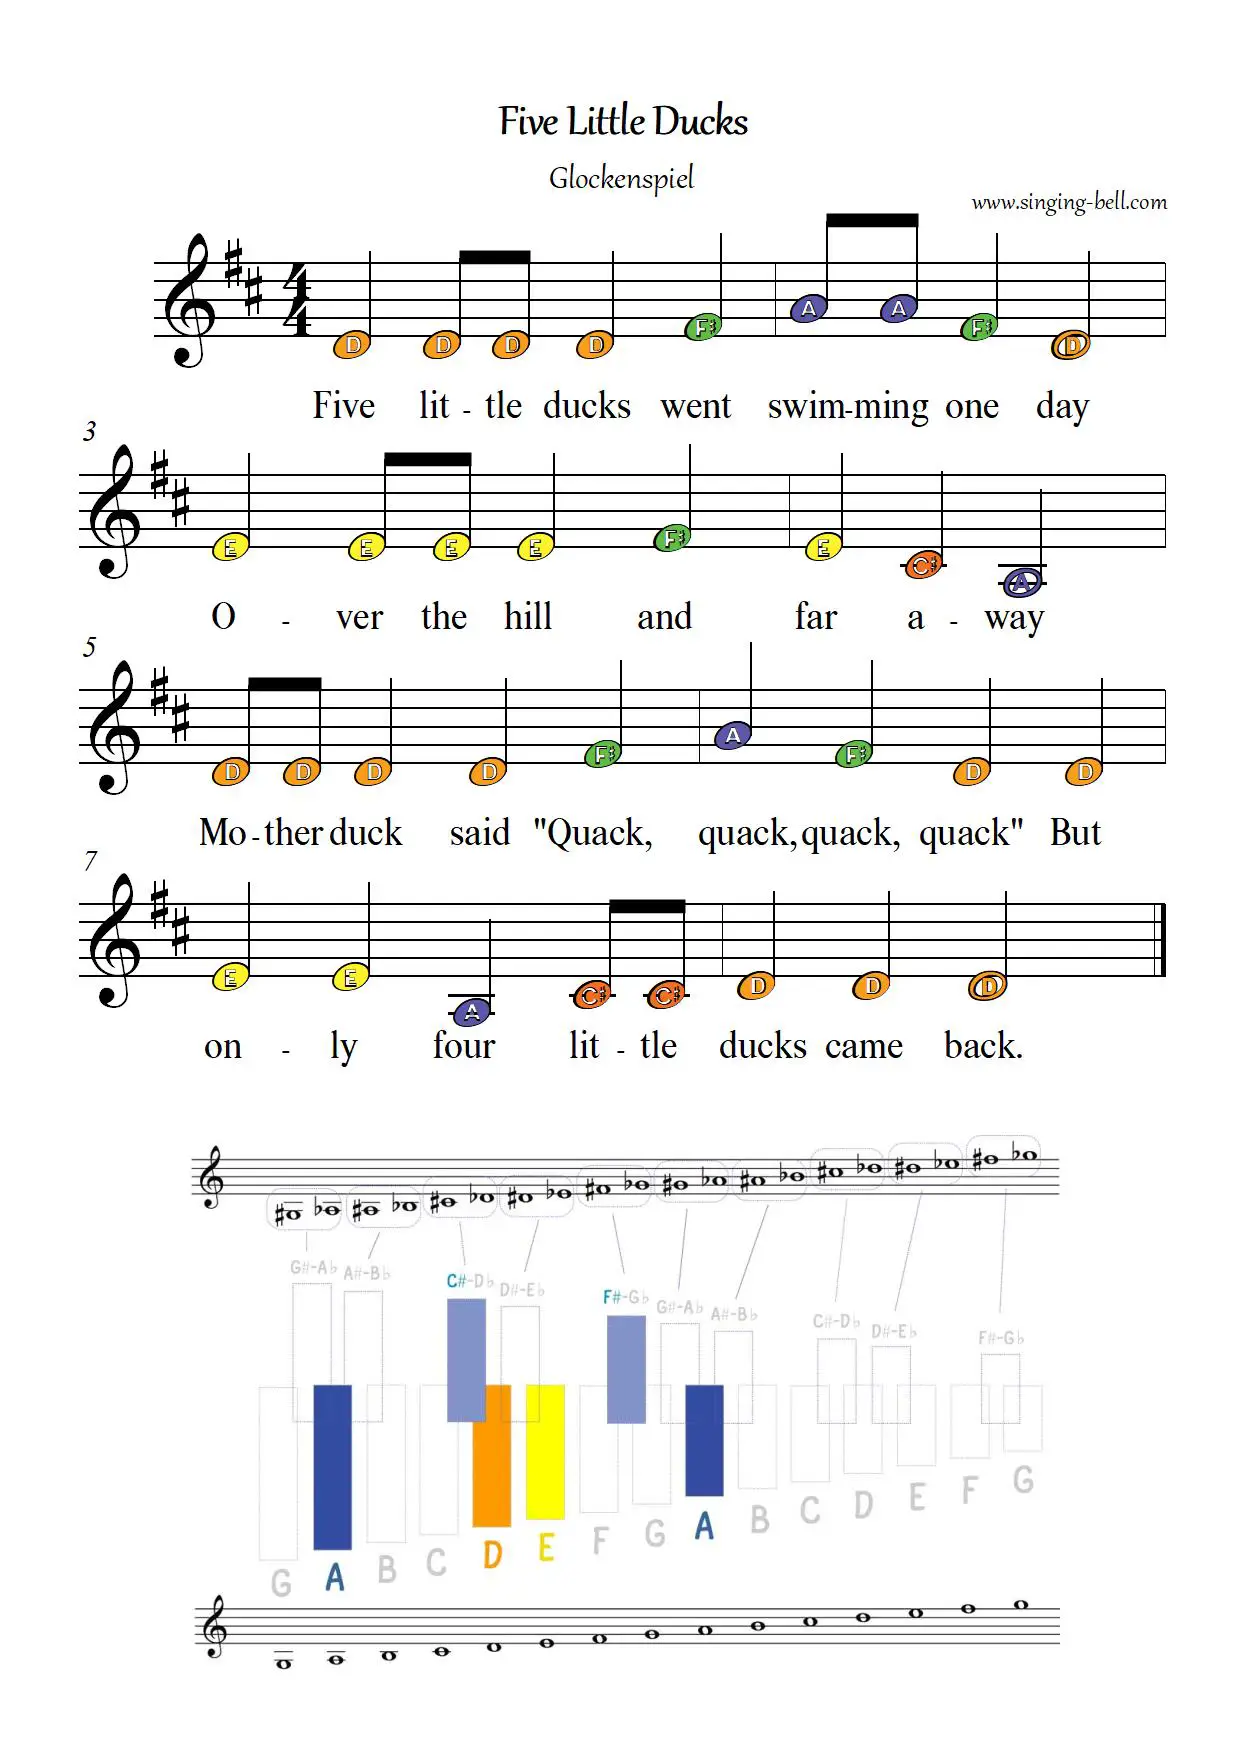 Five little ducks free xylophone glockenspiel sheet music color notes chart pdf